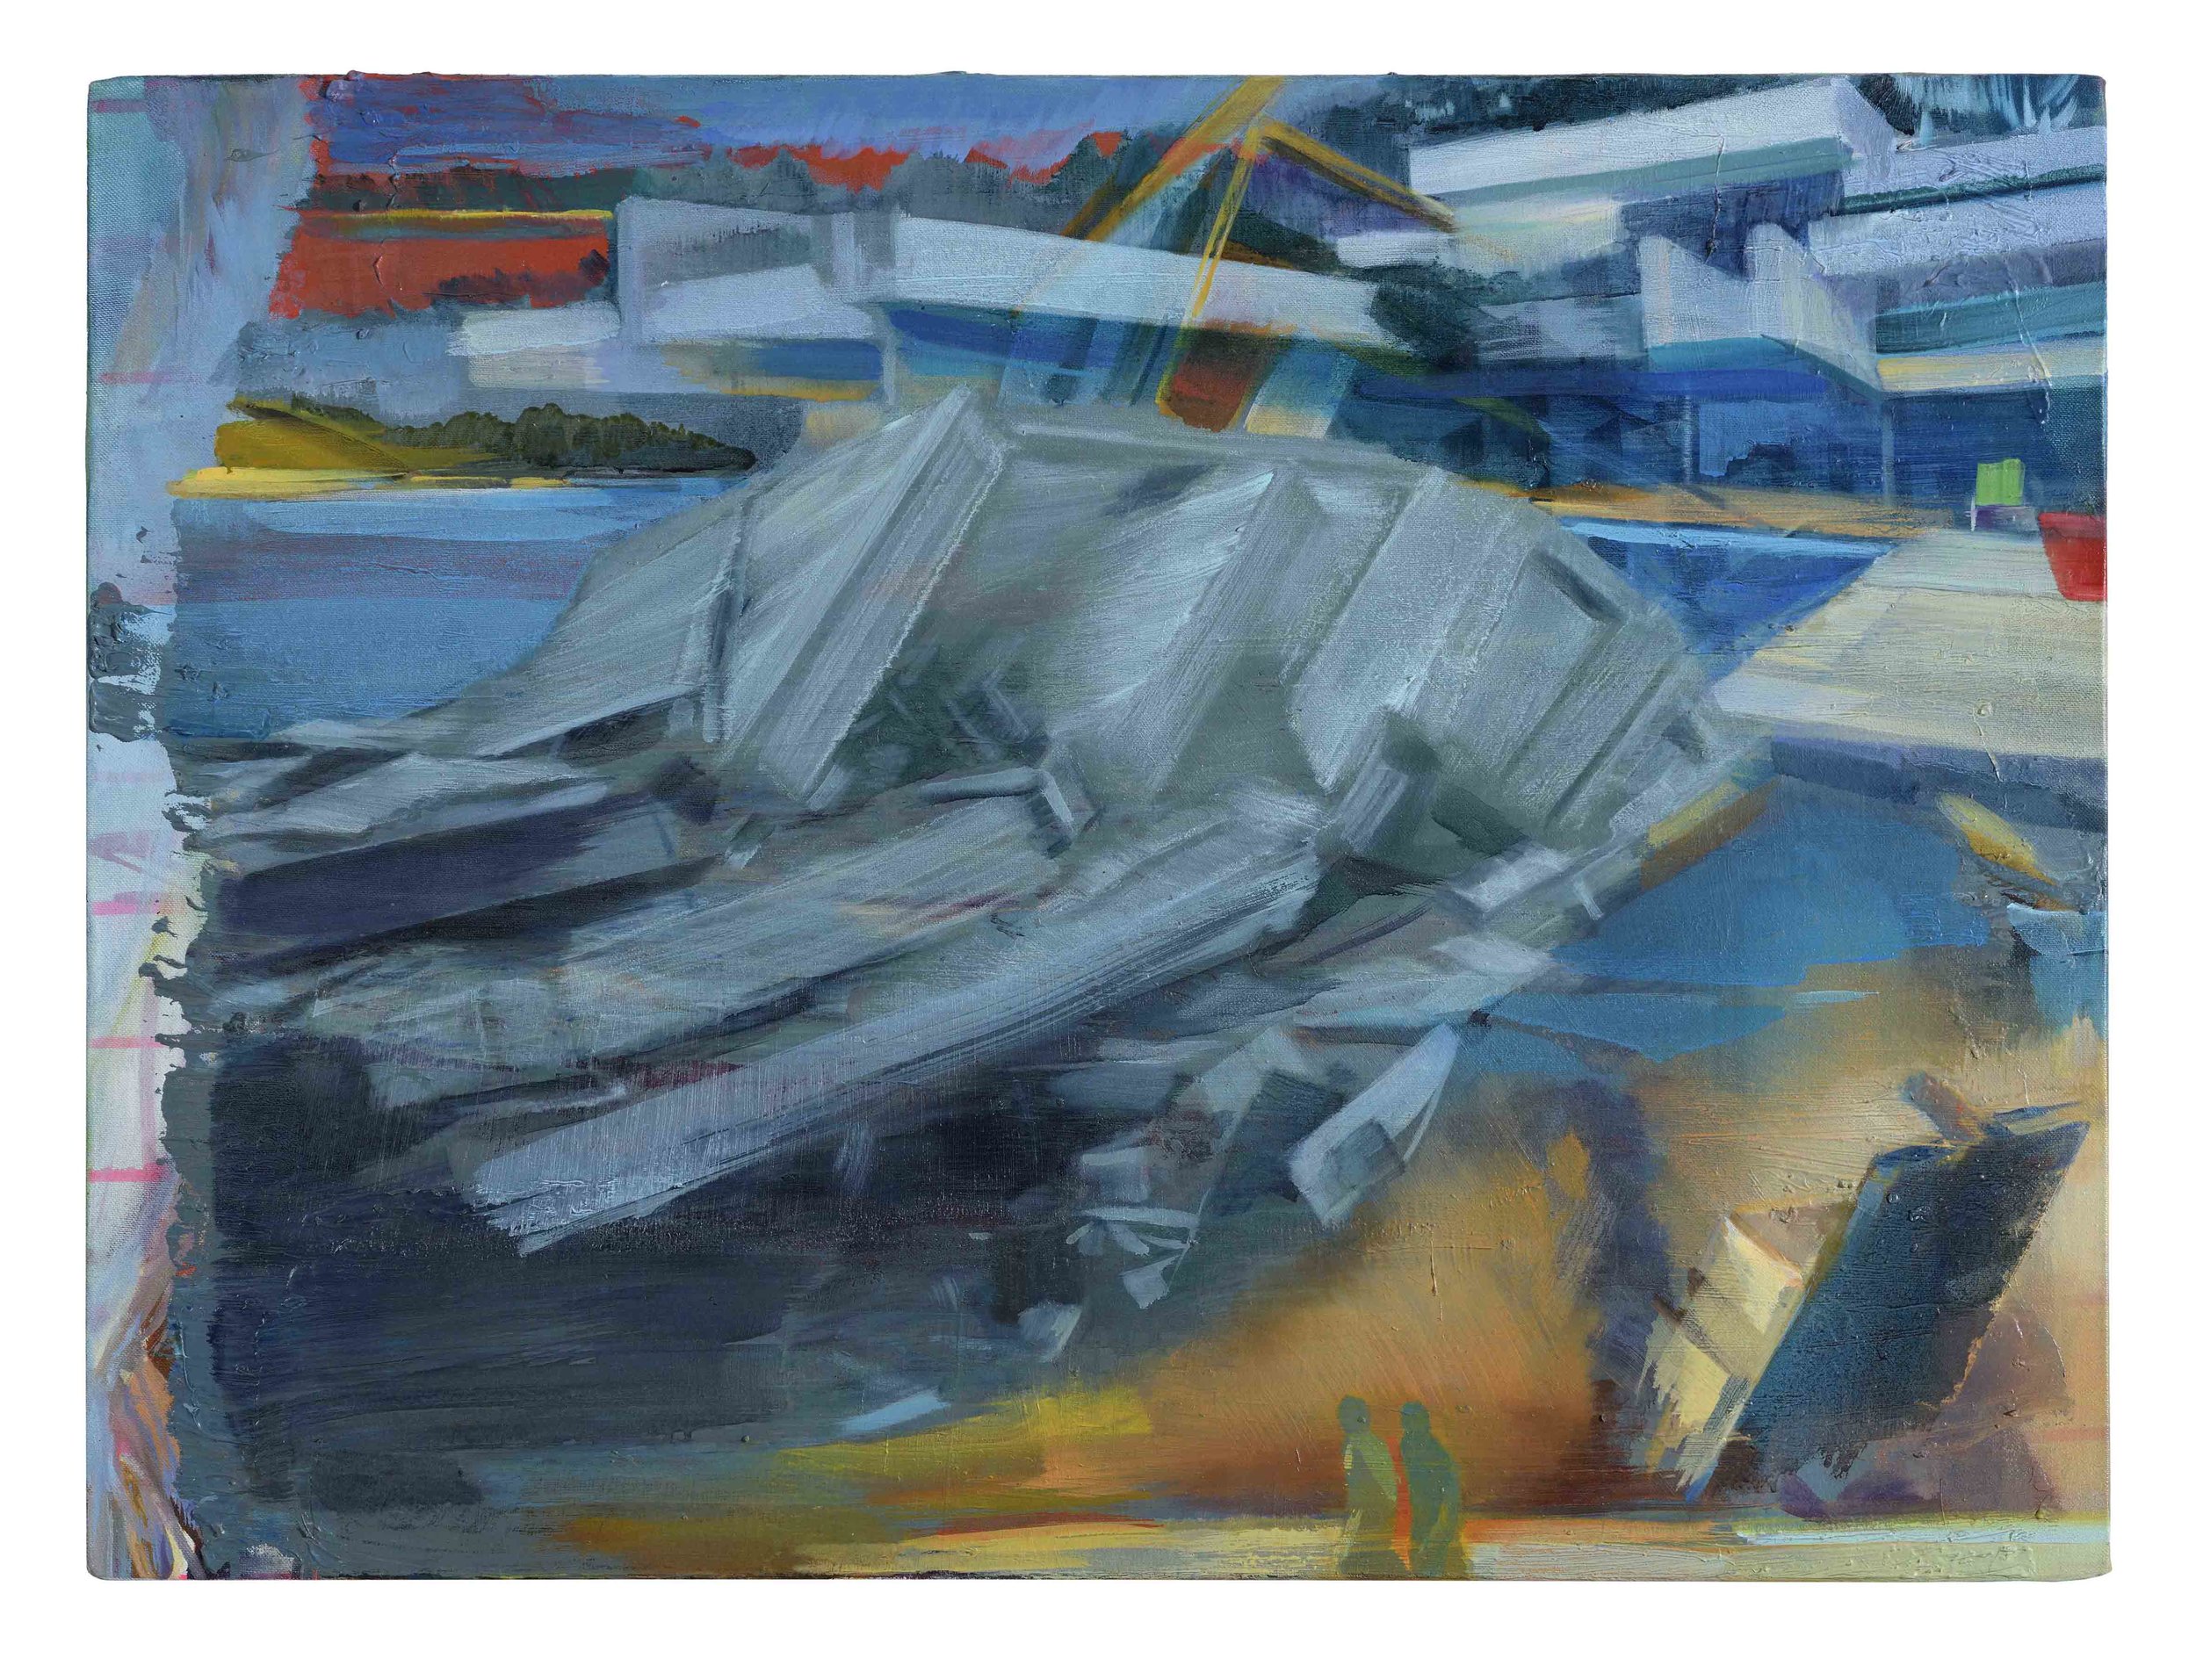   Triple landscape , 2012/2017, oil on canvas, 60x81cm. Private collection, UK 